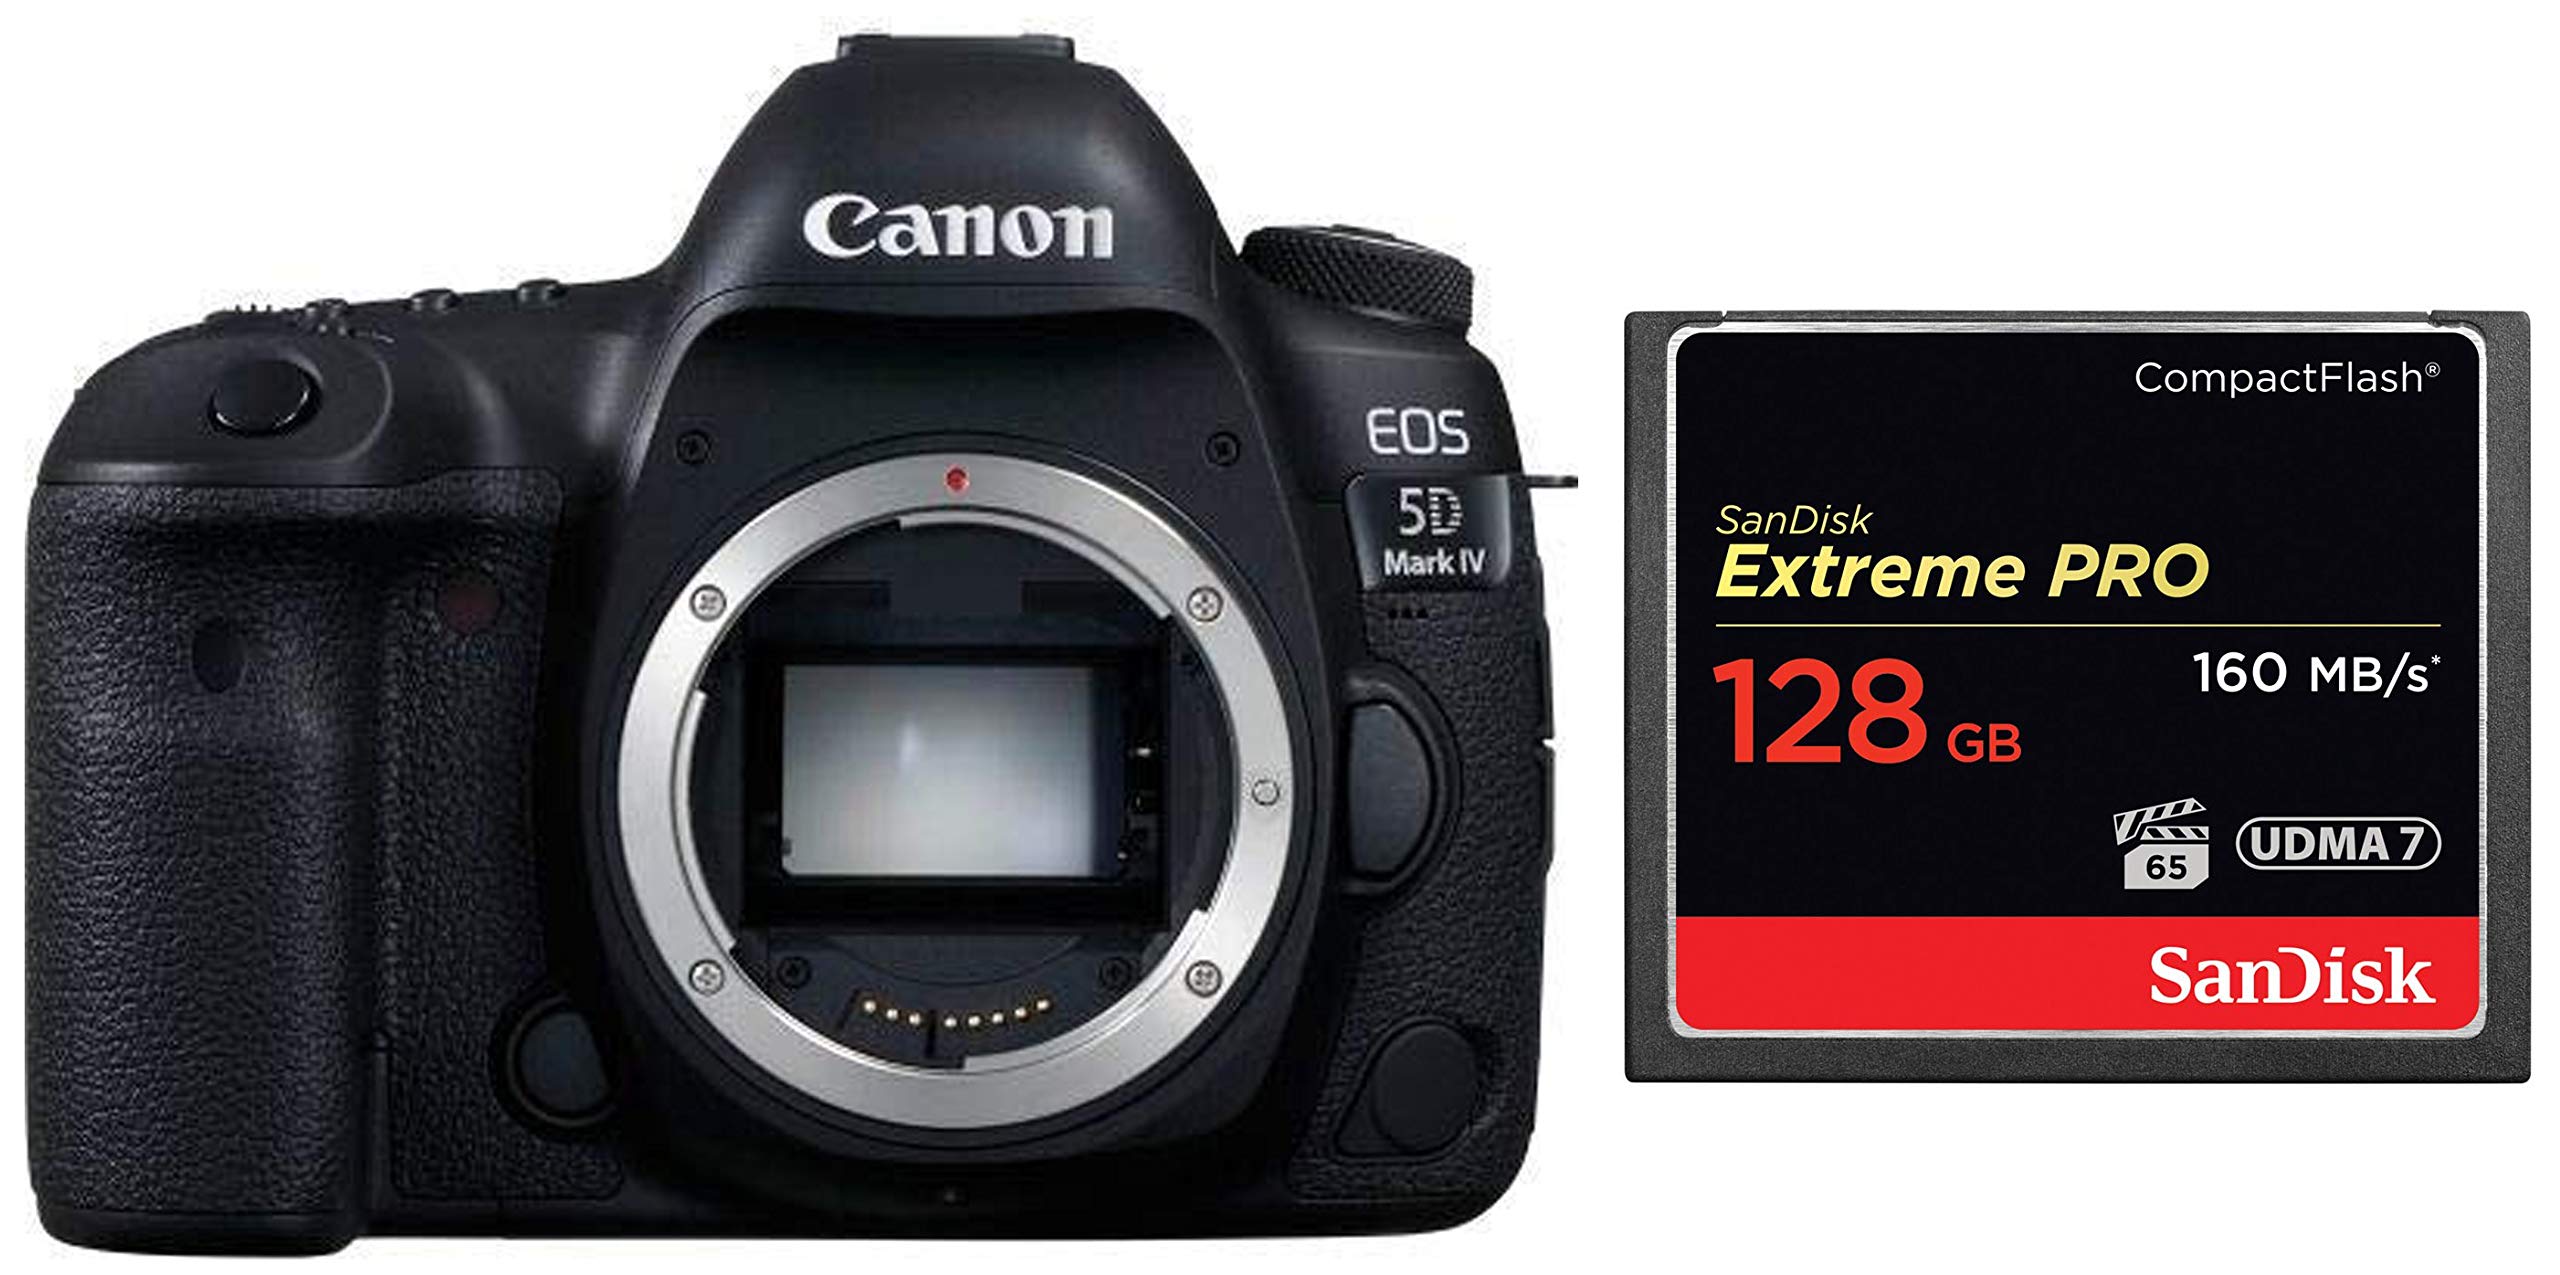 Canon EOS 5D Mark IV Full Frame Digital SLR Camera Body with 128GB CompactFlash Memory Card